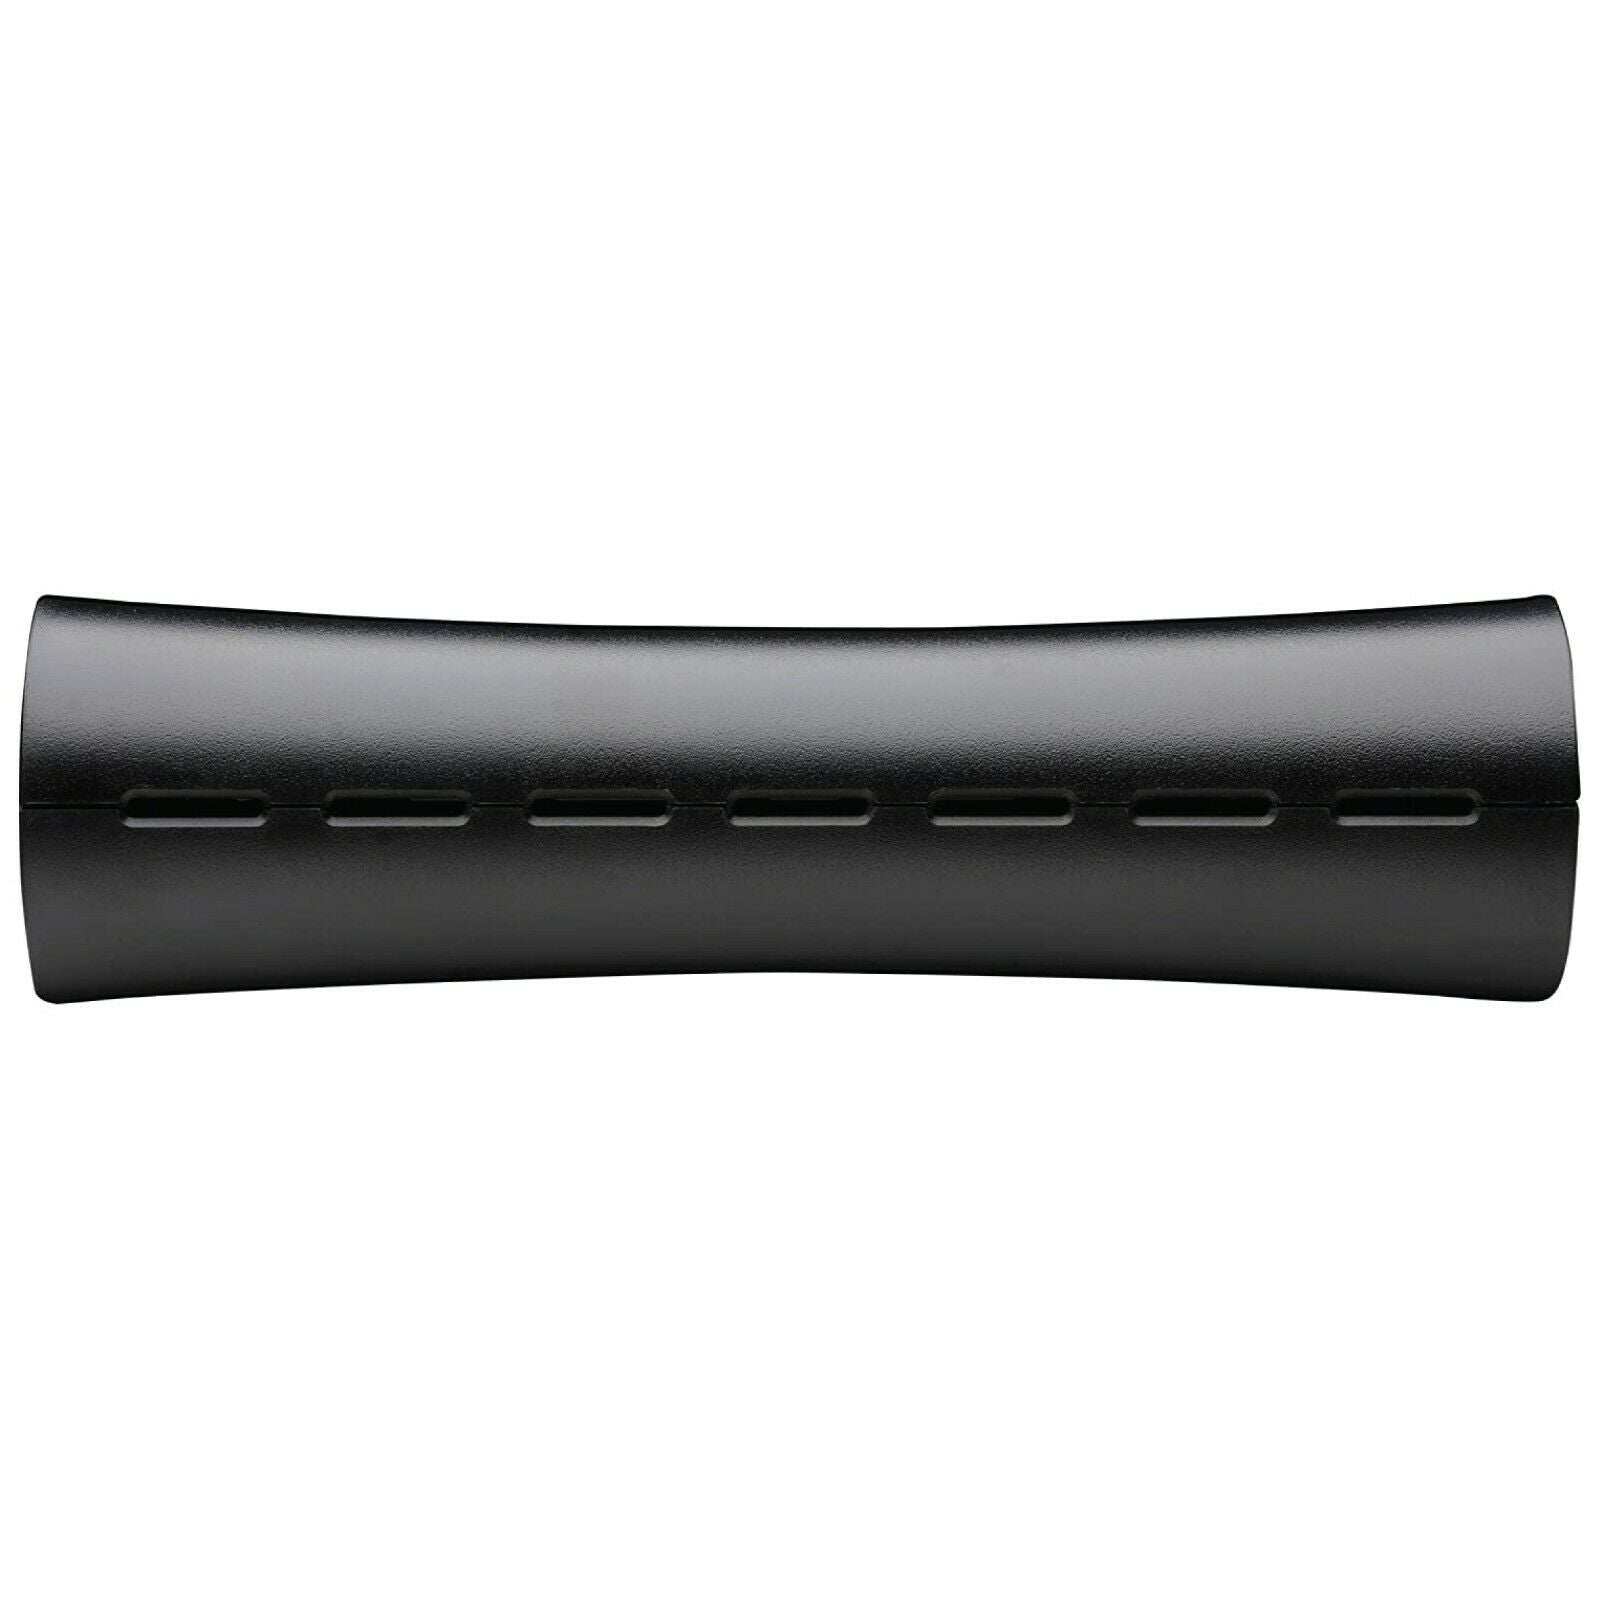 Hitachi 3.5" G-Drive XL 1TB USB 2.0 Portable Desktop External Hard Drive, Black